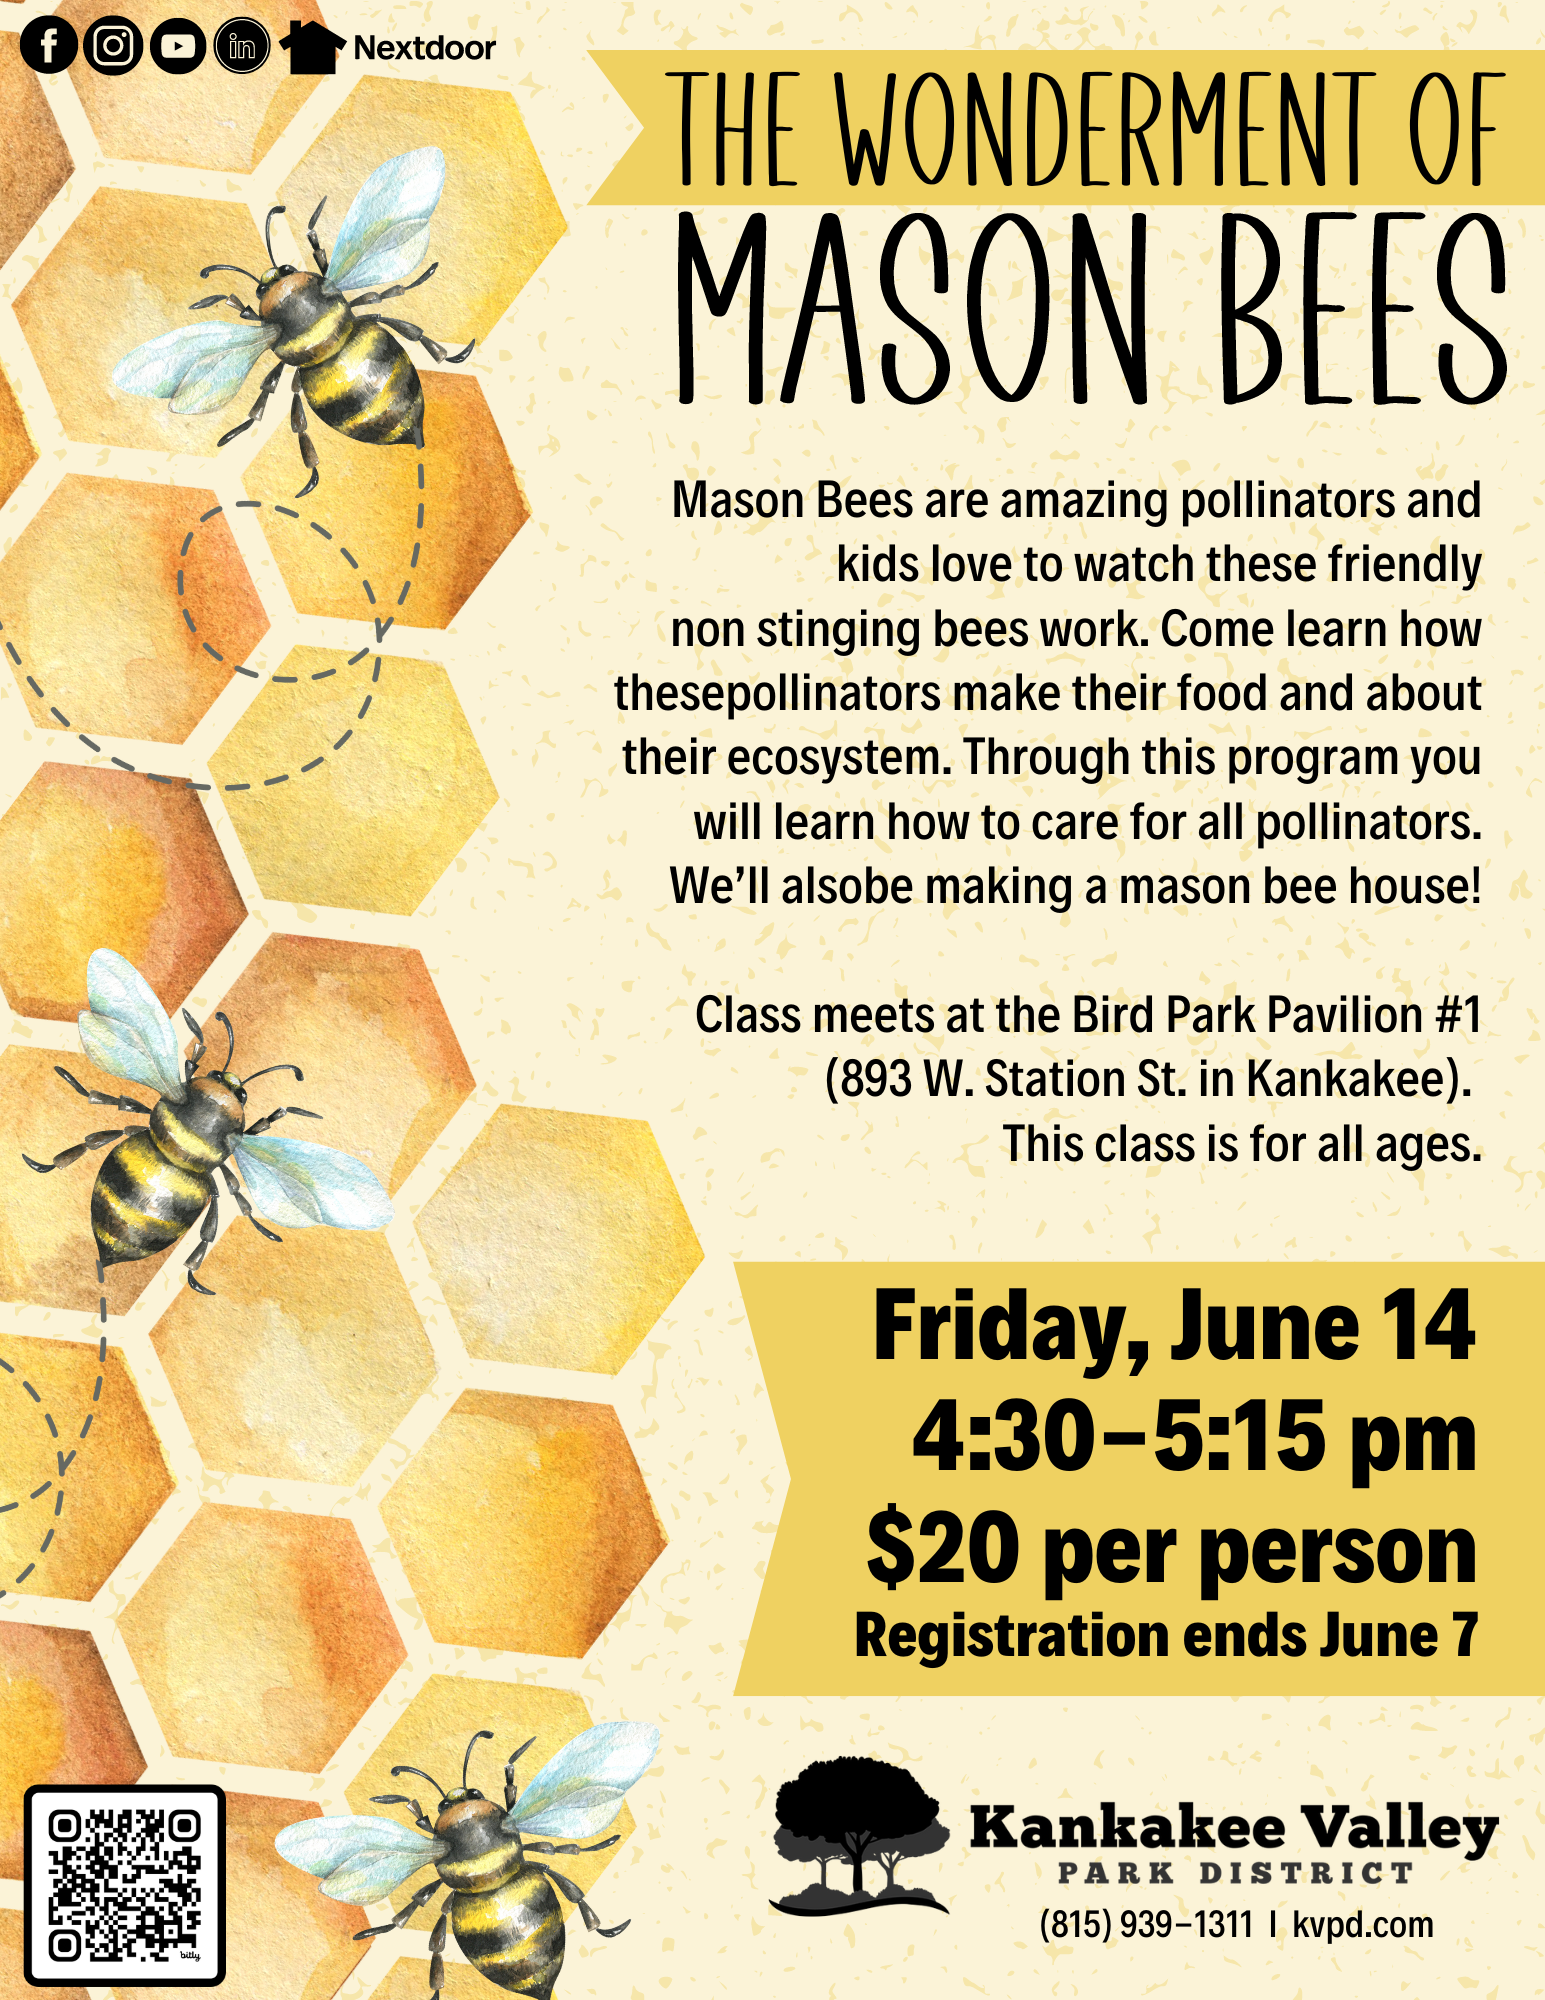 The Wonderment of Mason Bees